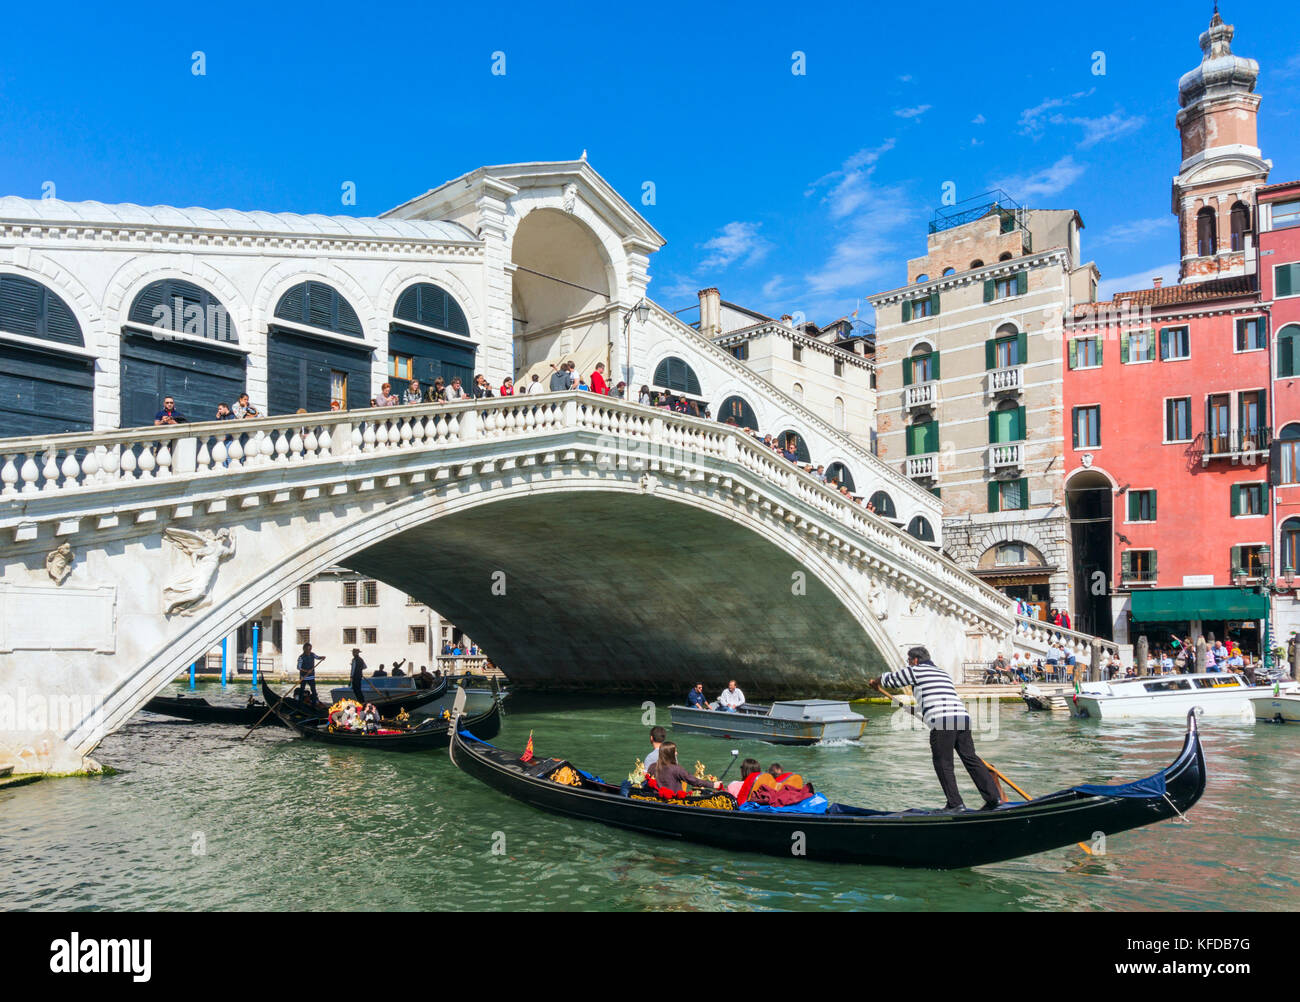 Rialto-brücke Venedig Italien Venedig Gondoliere mit Touristen in Gondeln unter die Rialto Brücke über den Canal Grande Venedig Italien EU-Europa Stockfoto